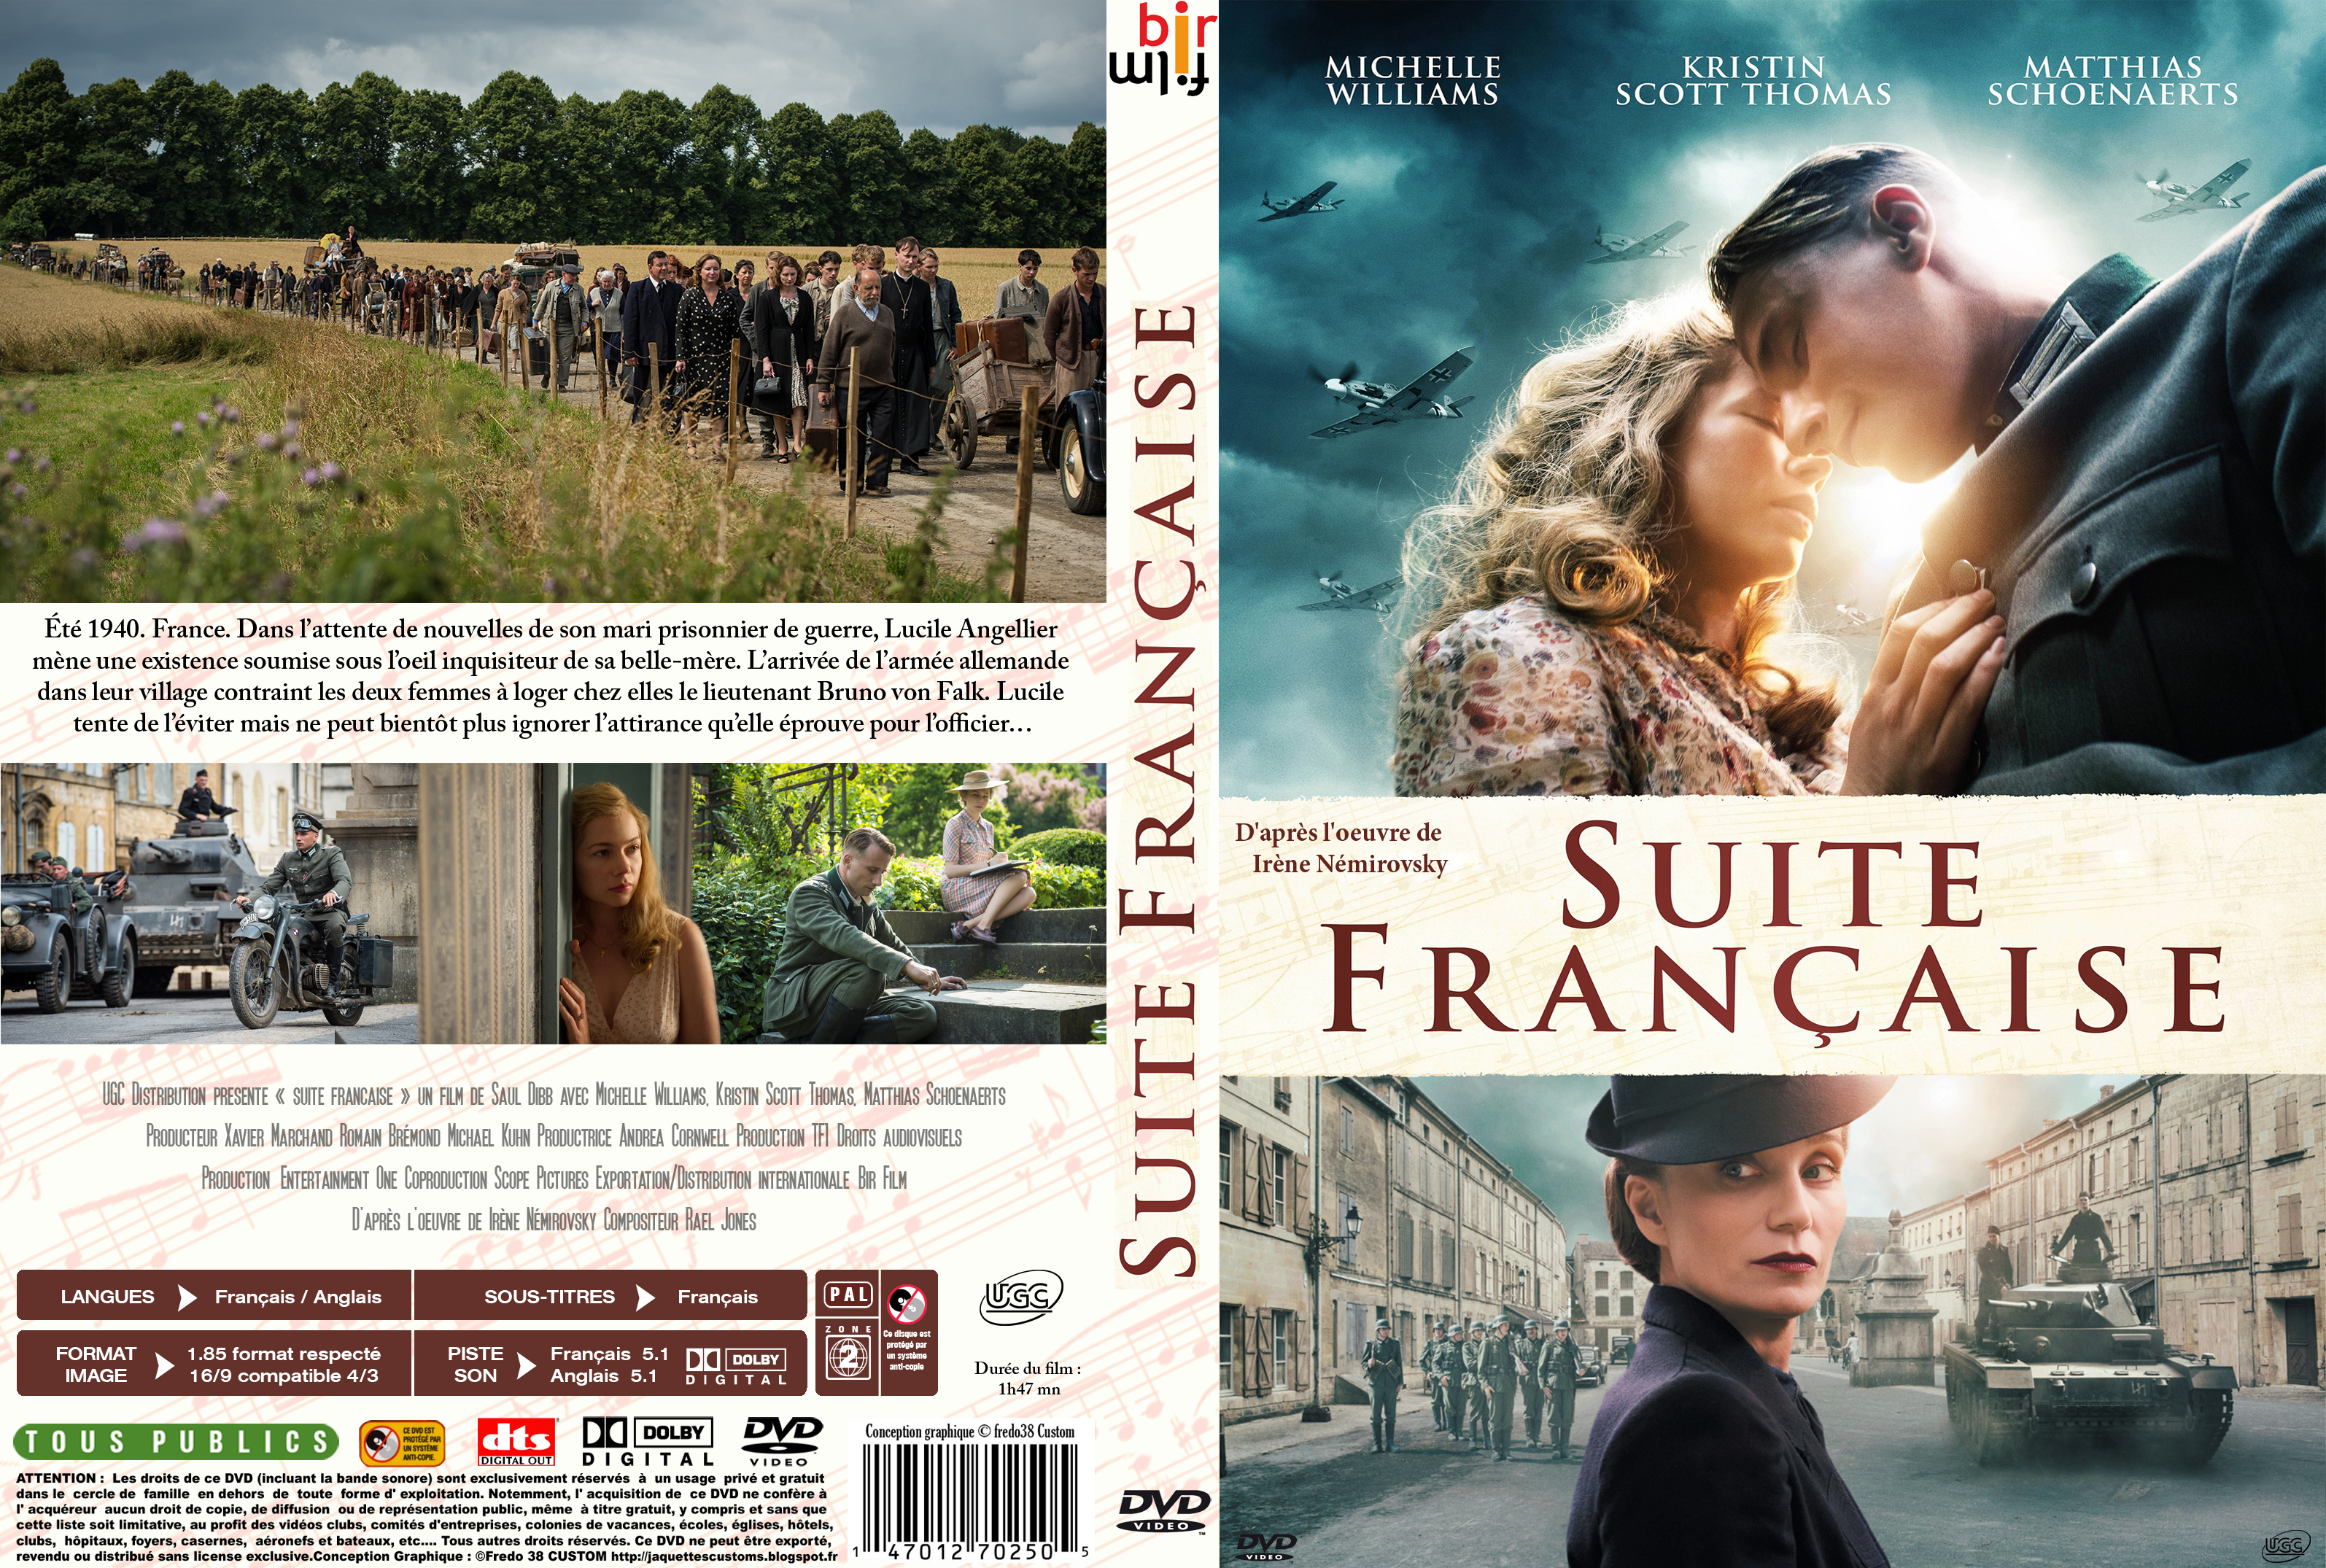 Jaquette DVD Suite Franaise custom v2